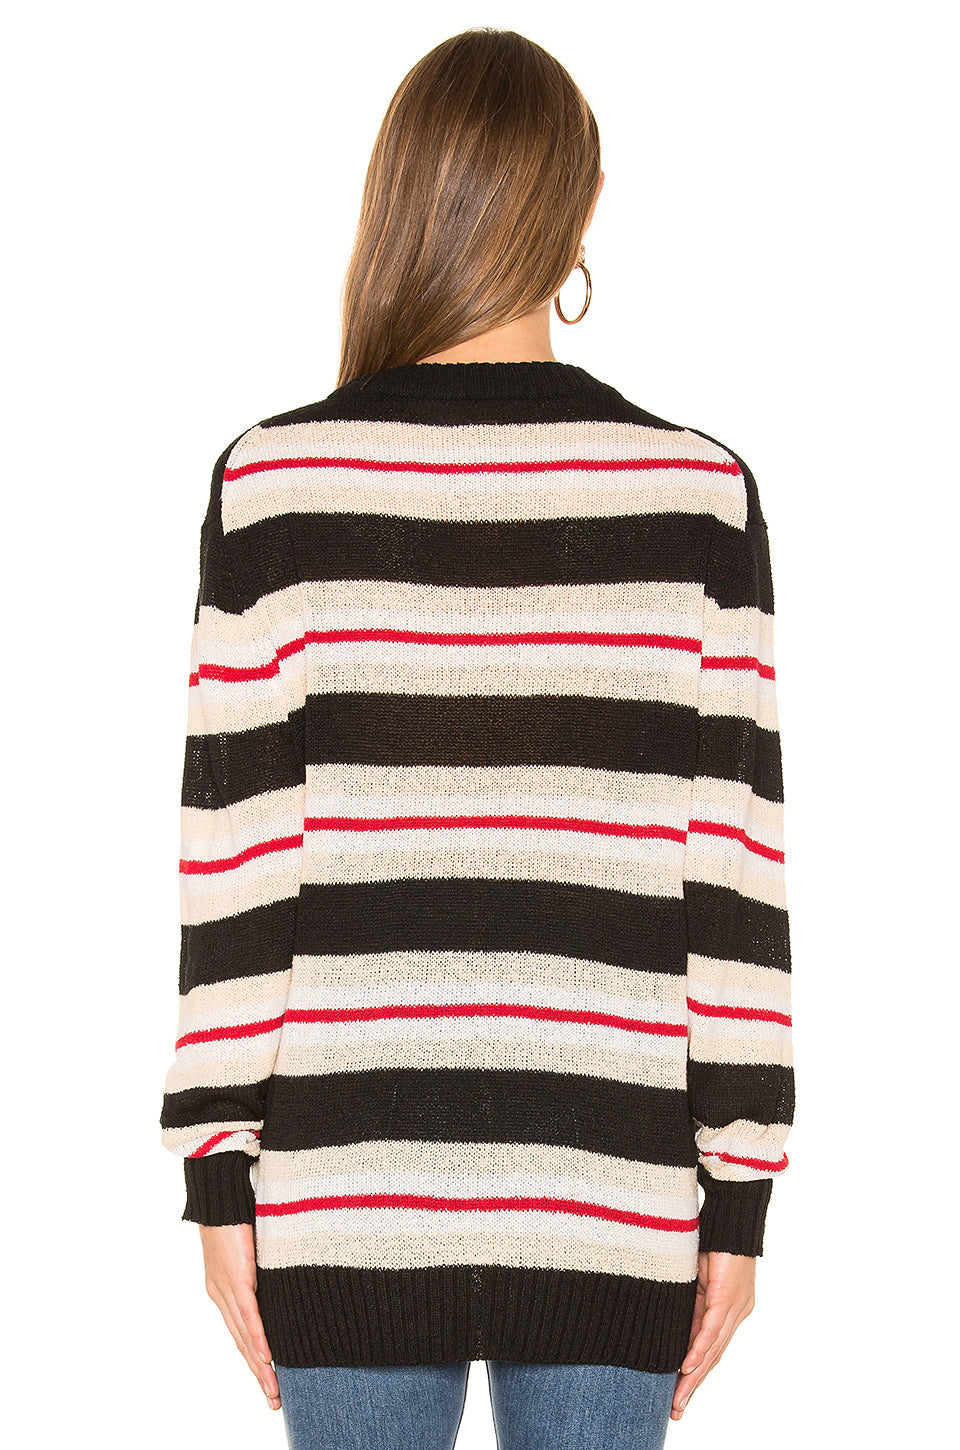 Robbins Sweater in NUDE & BLACK STRIPE